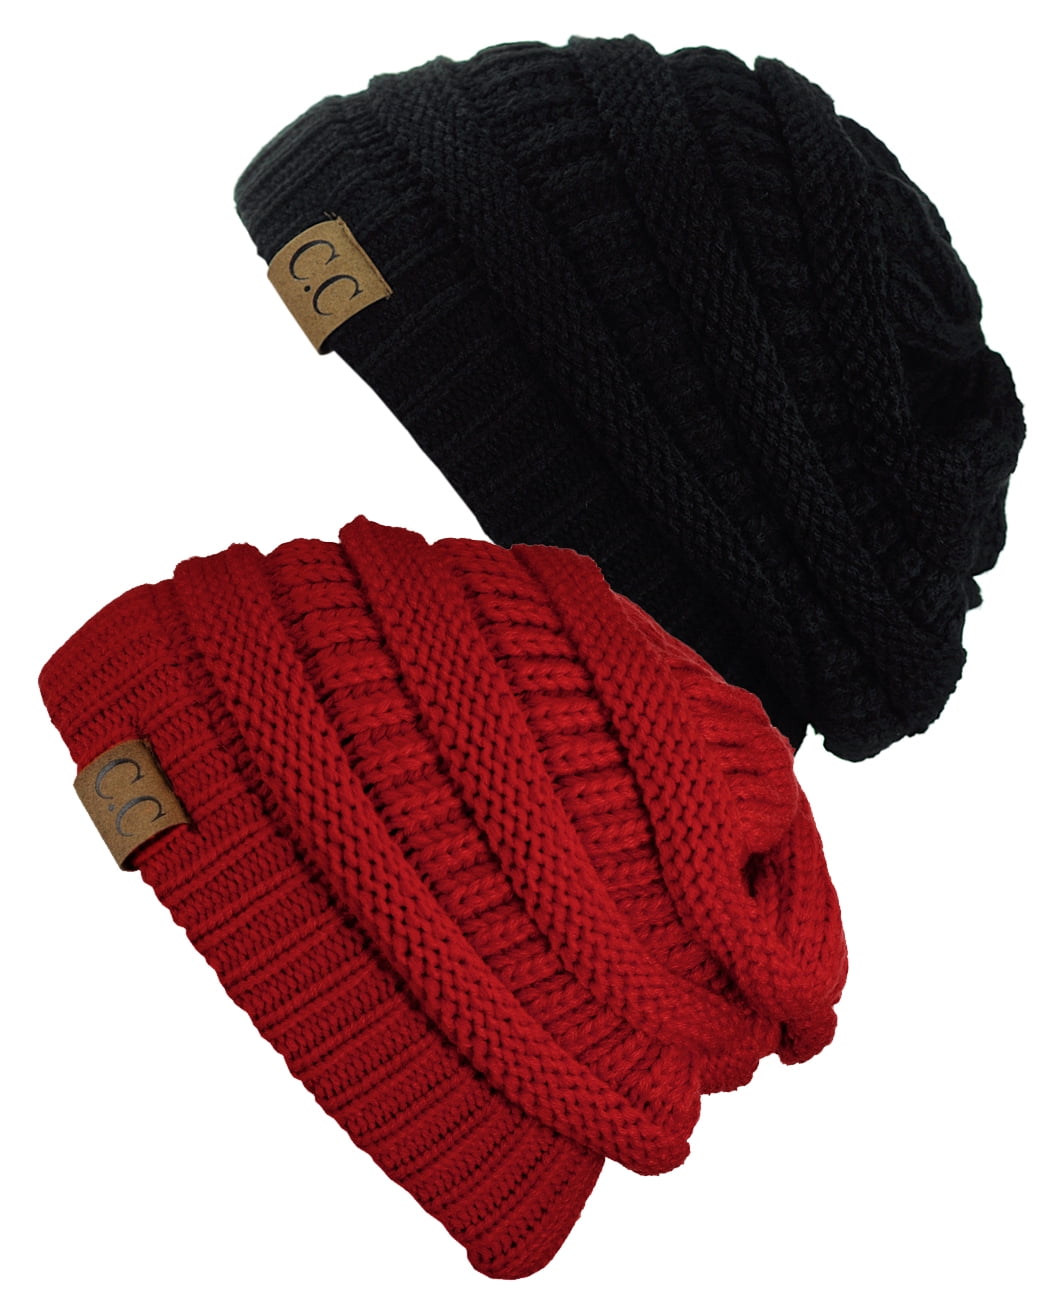 Details about   Unisex Winter Hats Sports Warm Cap Running Travel Beanie Hat Ski Hats Skully 